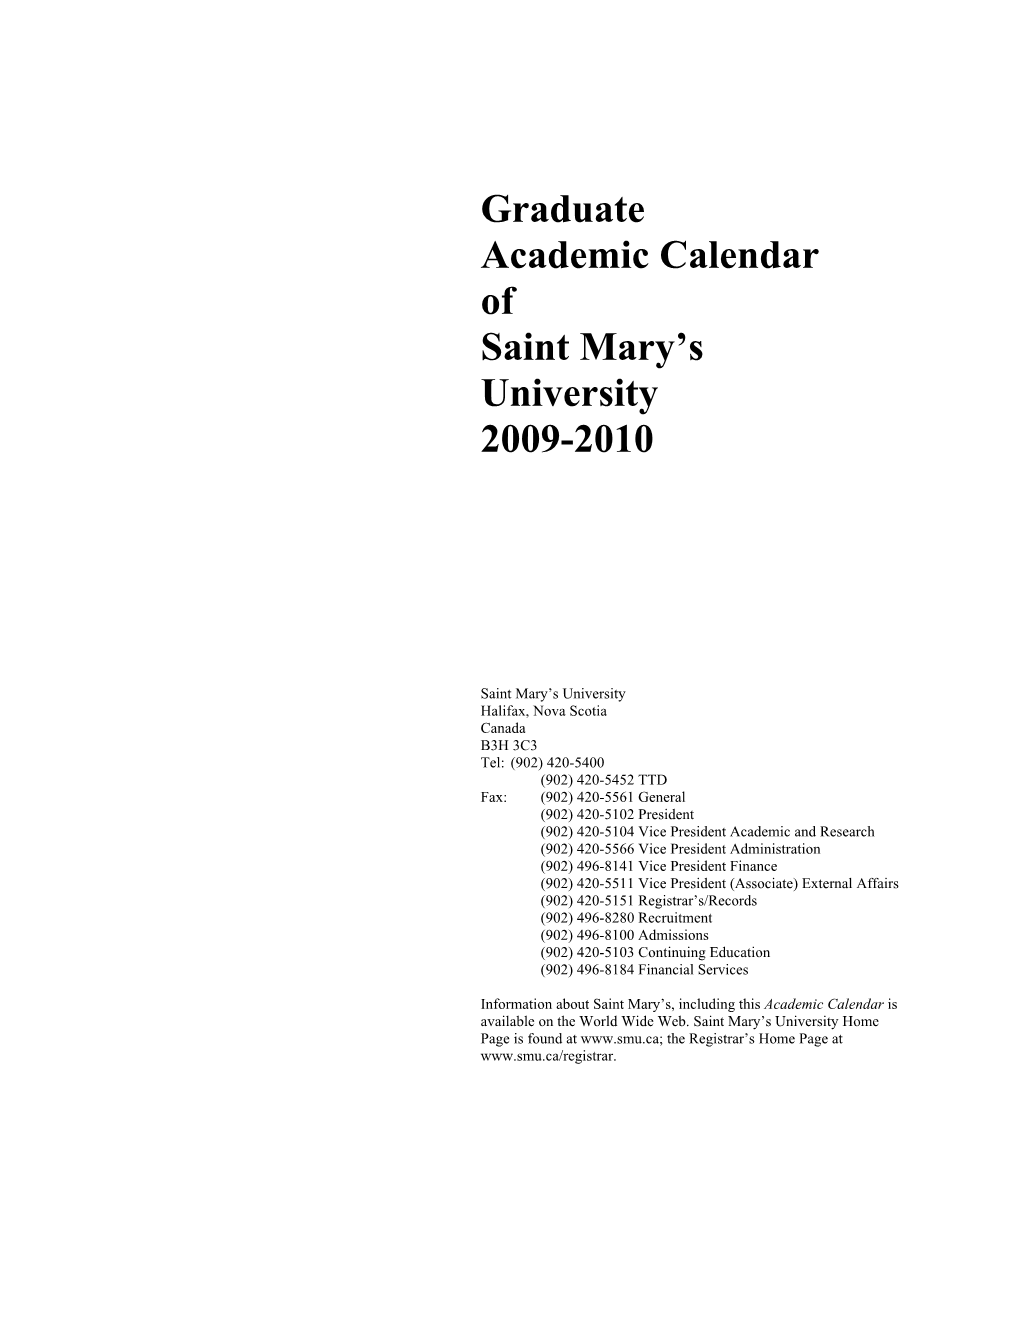 Academic Calendar of Saint Mary’S University 2009-2010